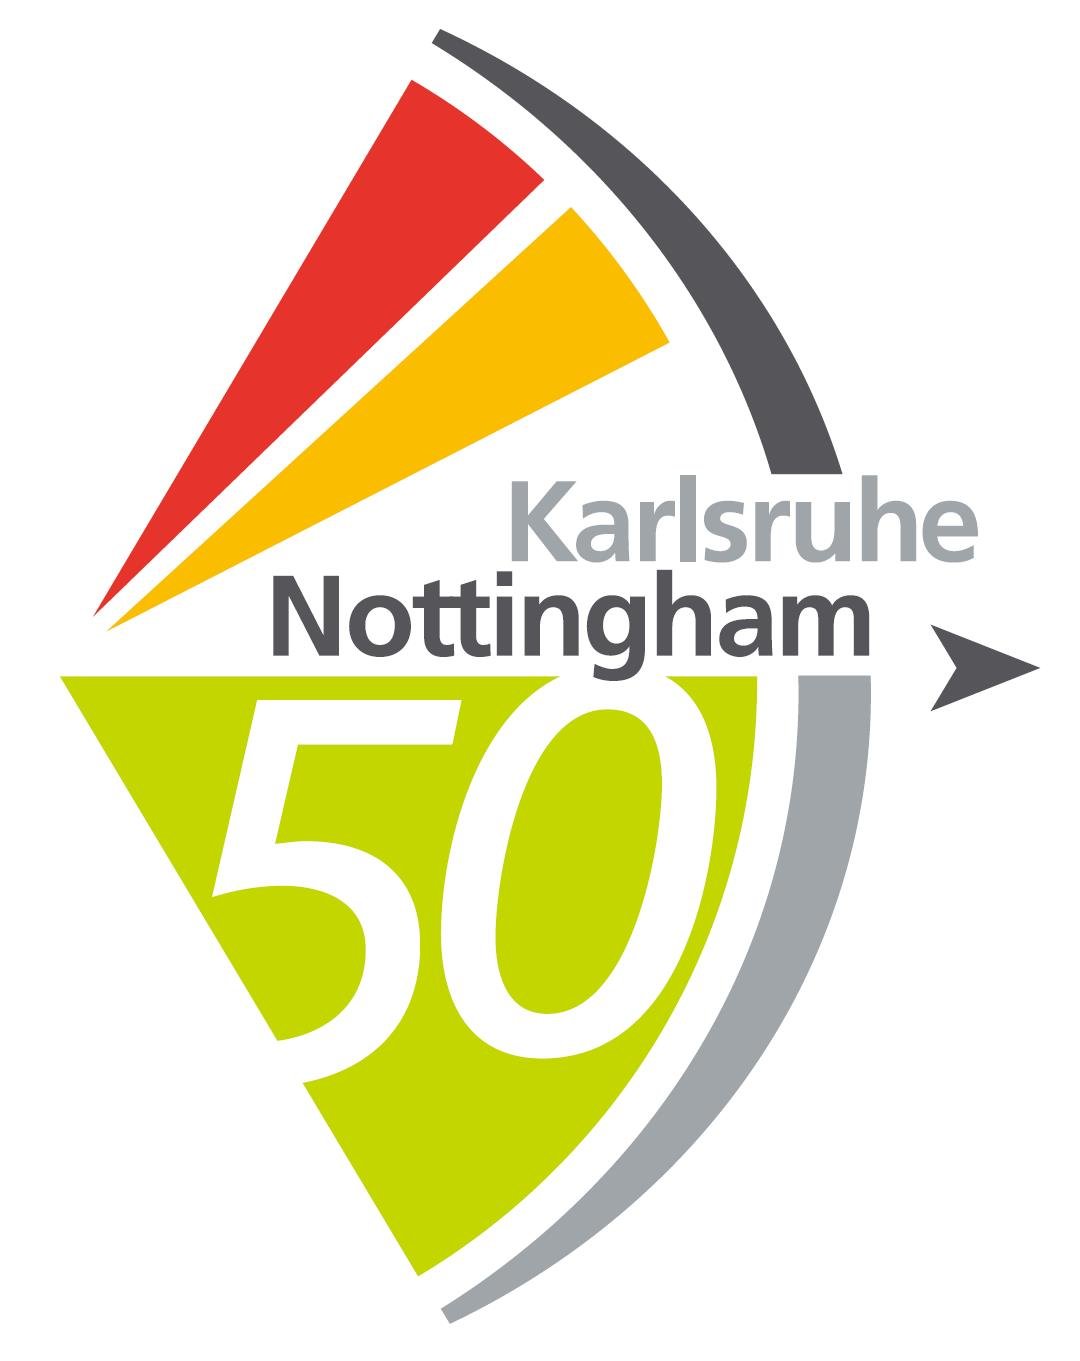 Celebrating 50 years of friendship between Nottingham and Karlsruhe